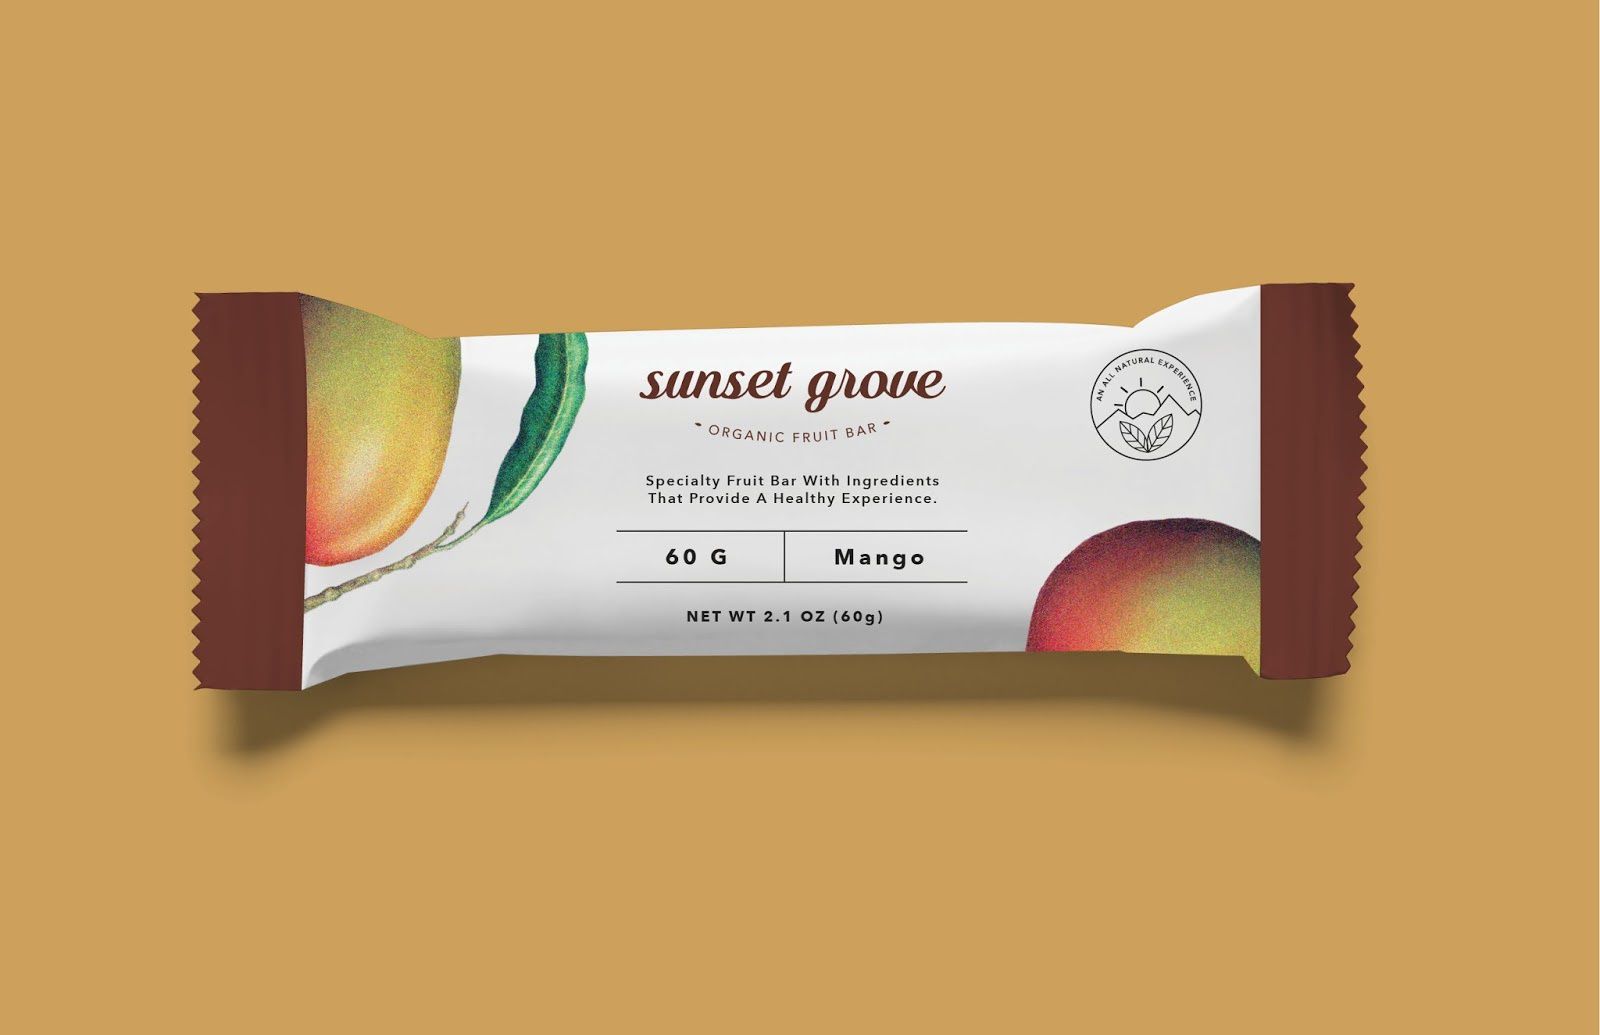 Sunset Grove (barres céréales bio) | Design (concept) : Donna Tiao, Pasadena, Etats-Unis (août 2016)